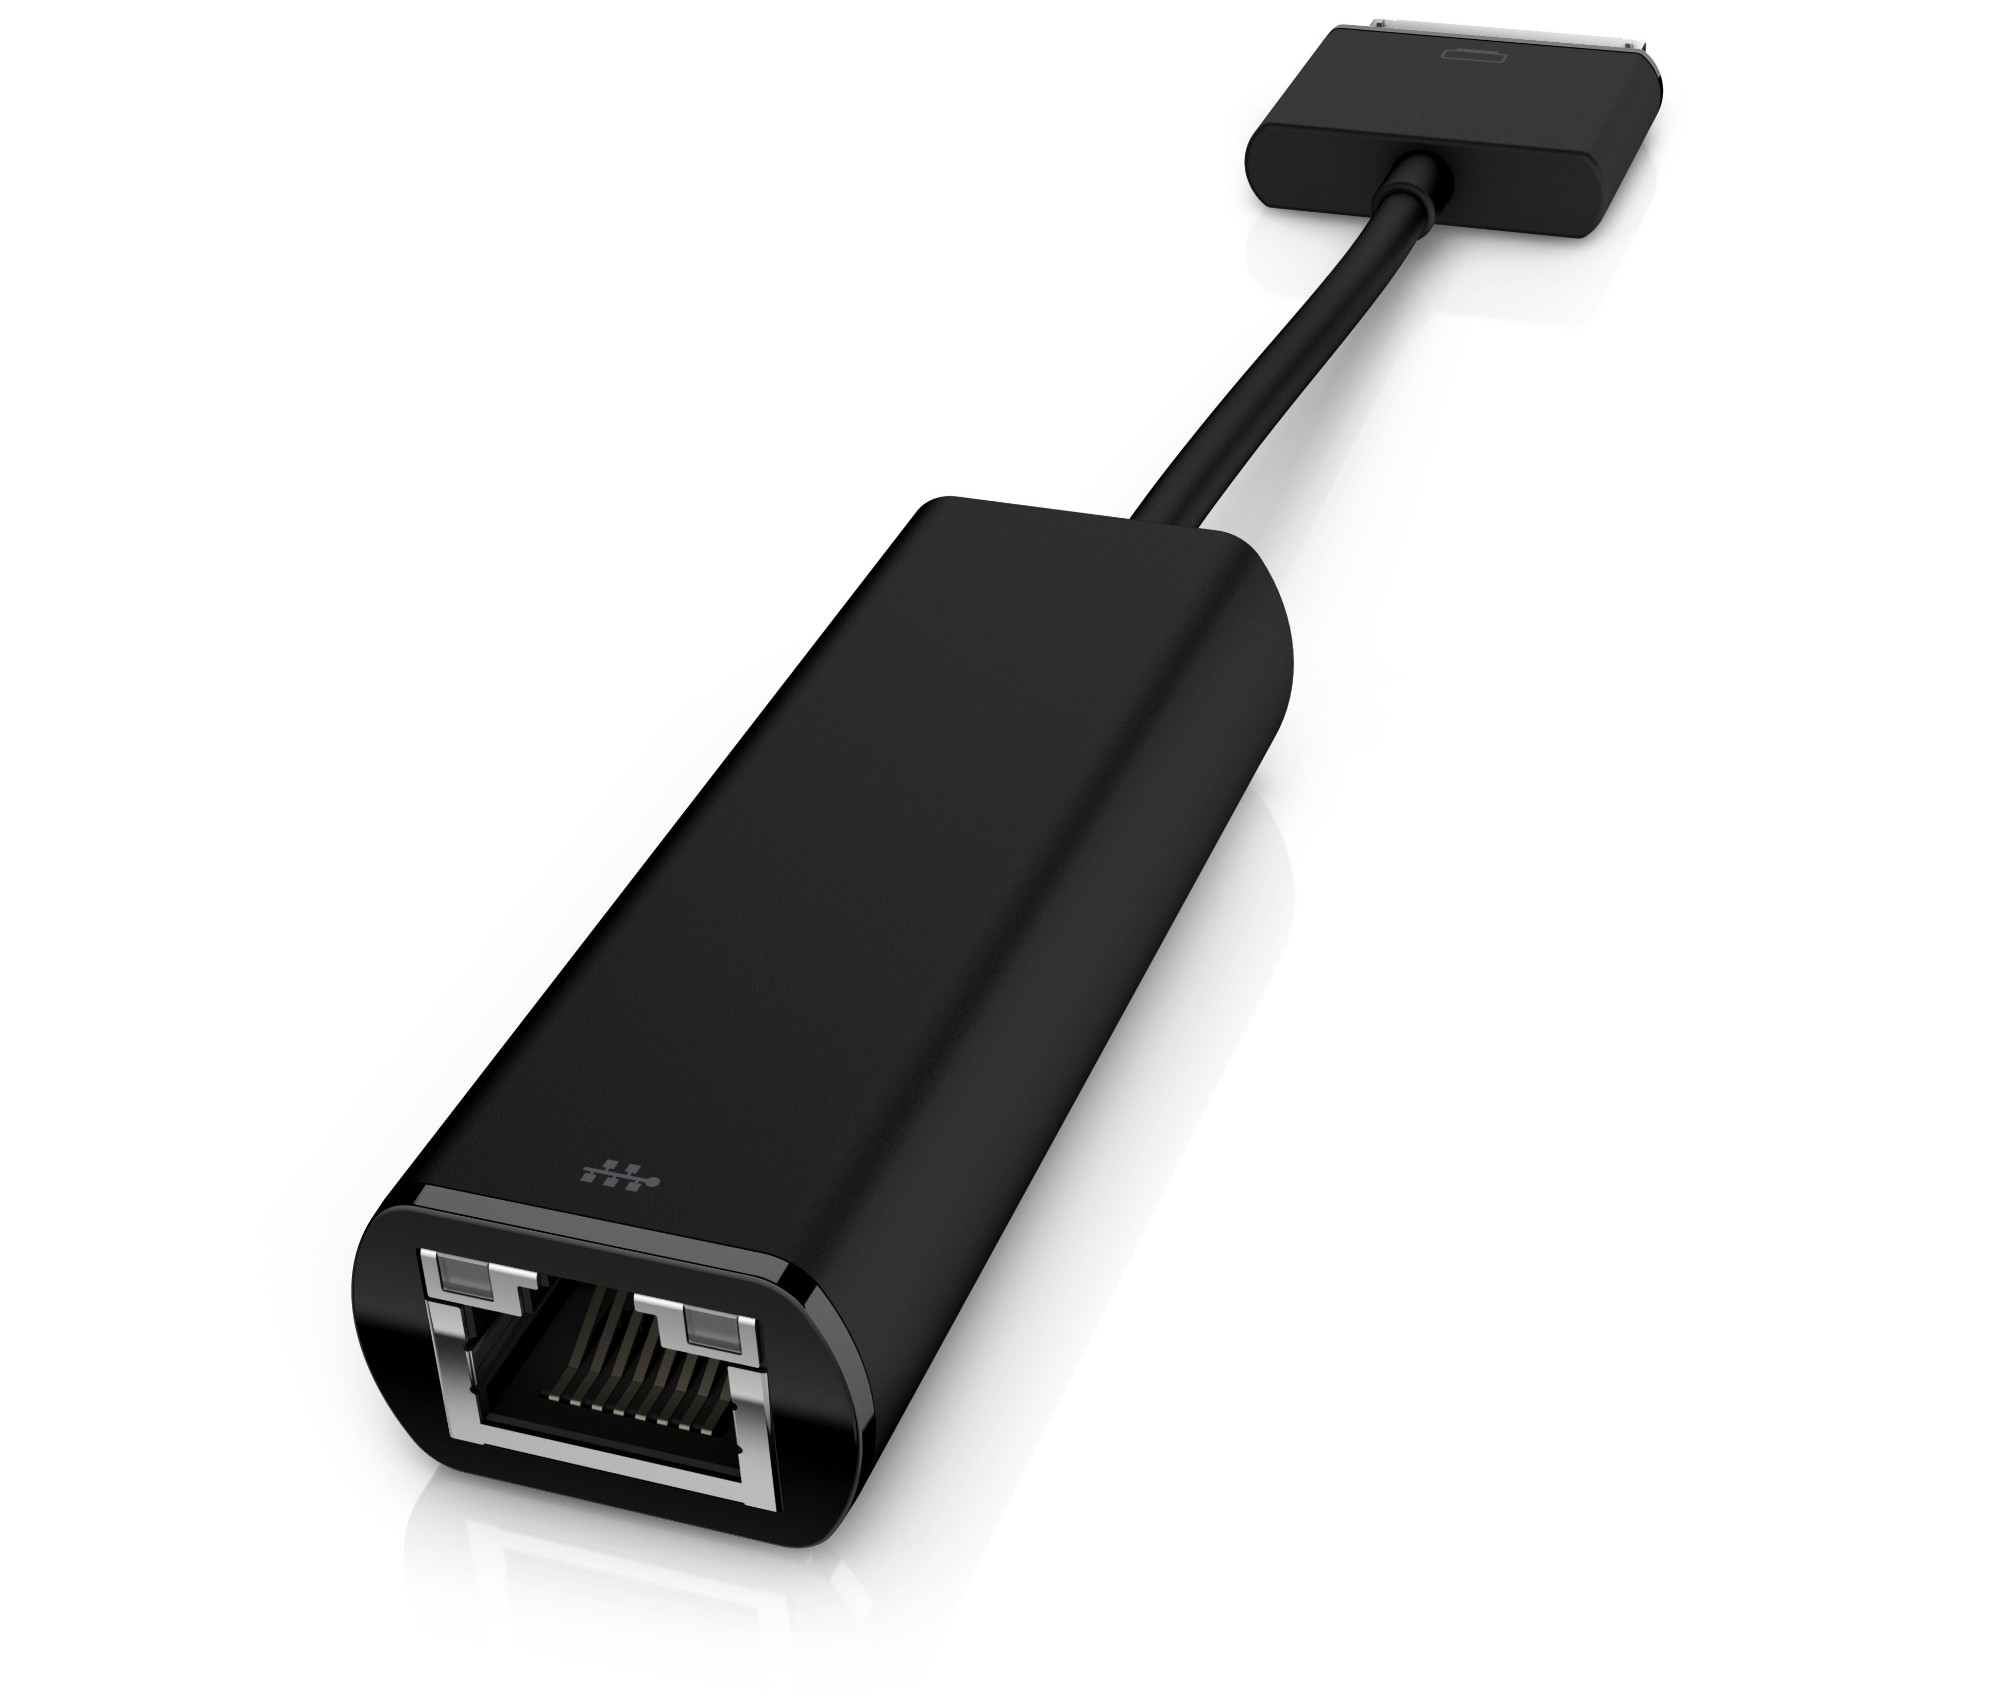 HP ElitePad Ethernet Adapter